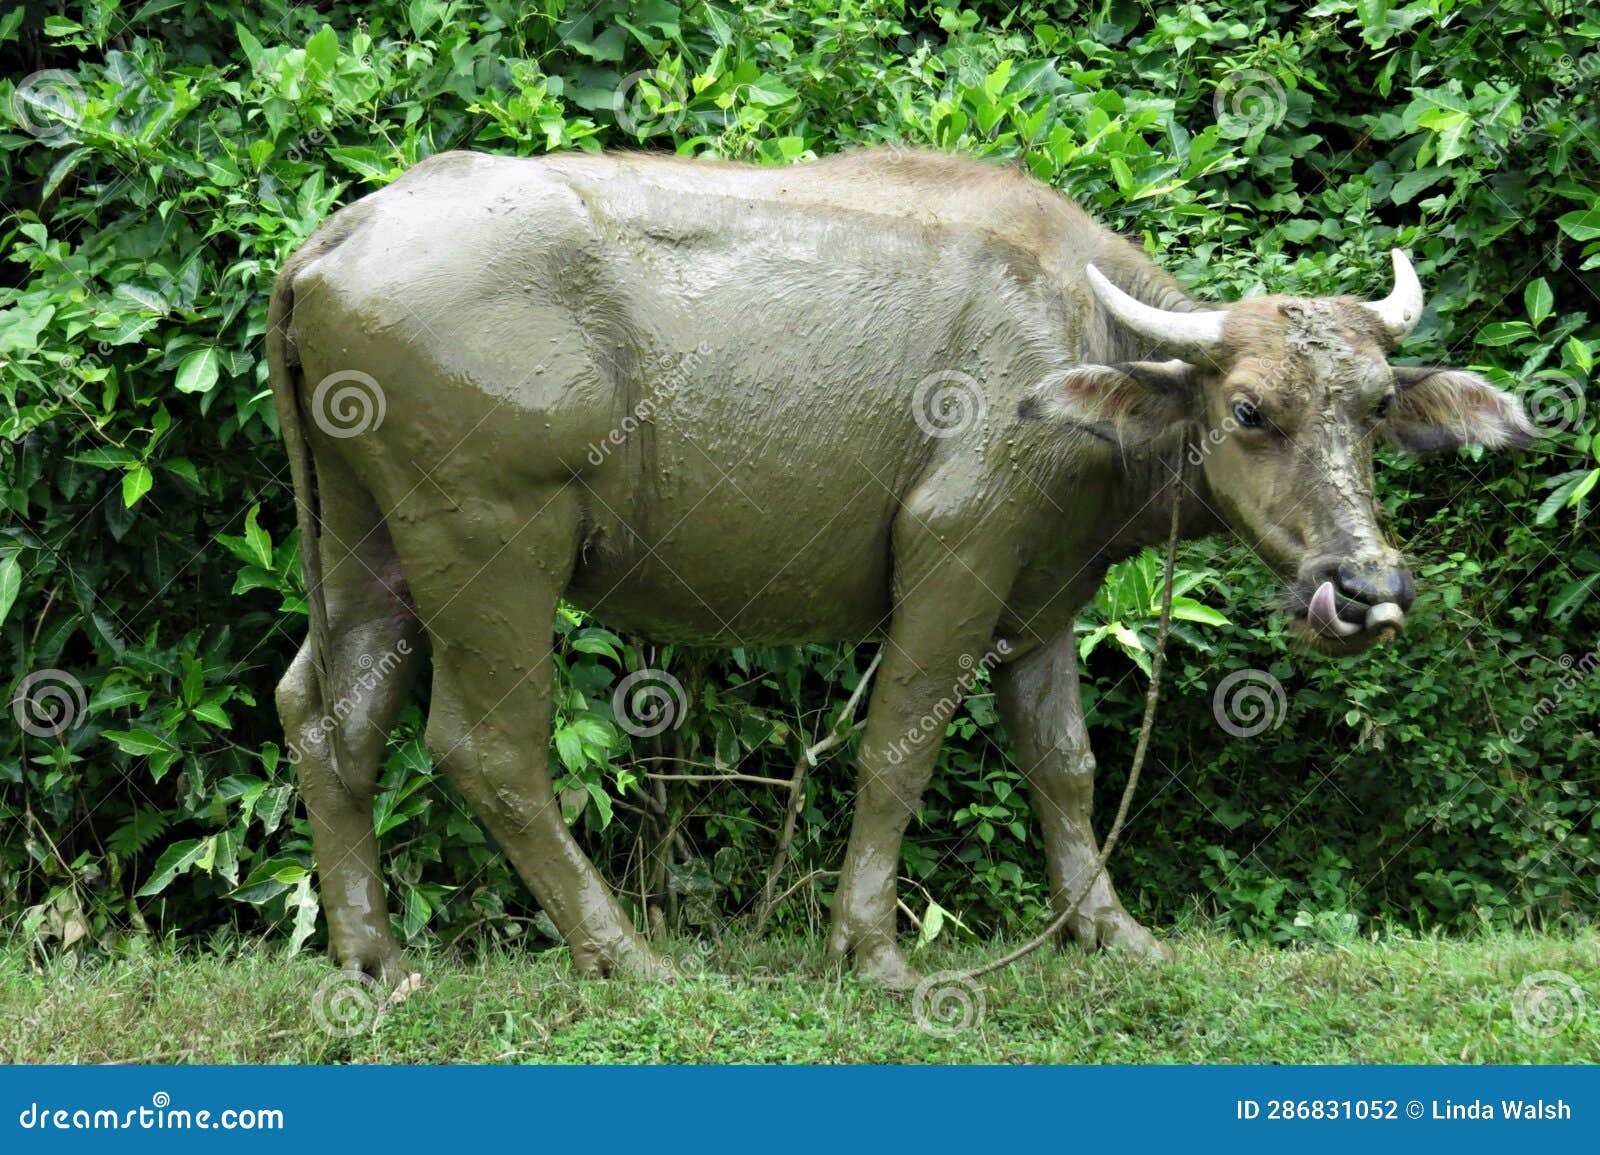 Muddy Carabao Water Buffalo Stock Photo - Image of domesticated, water ...